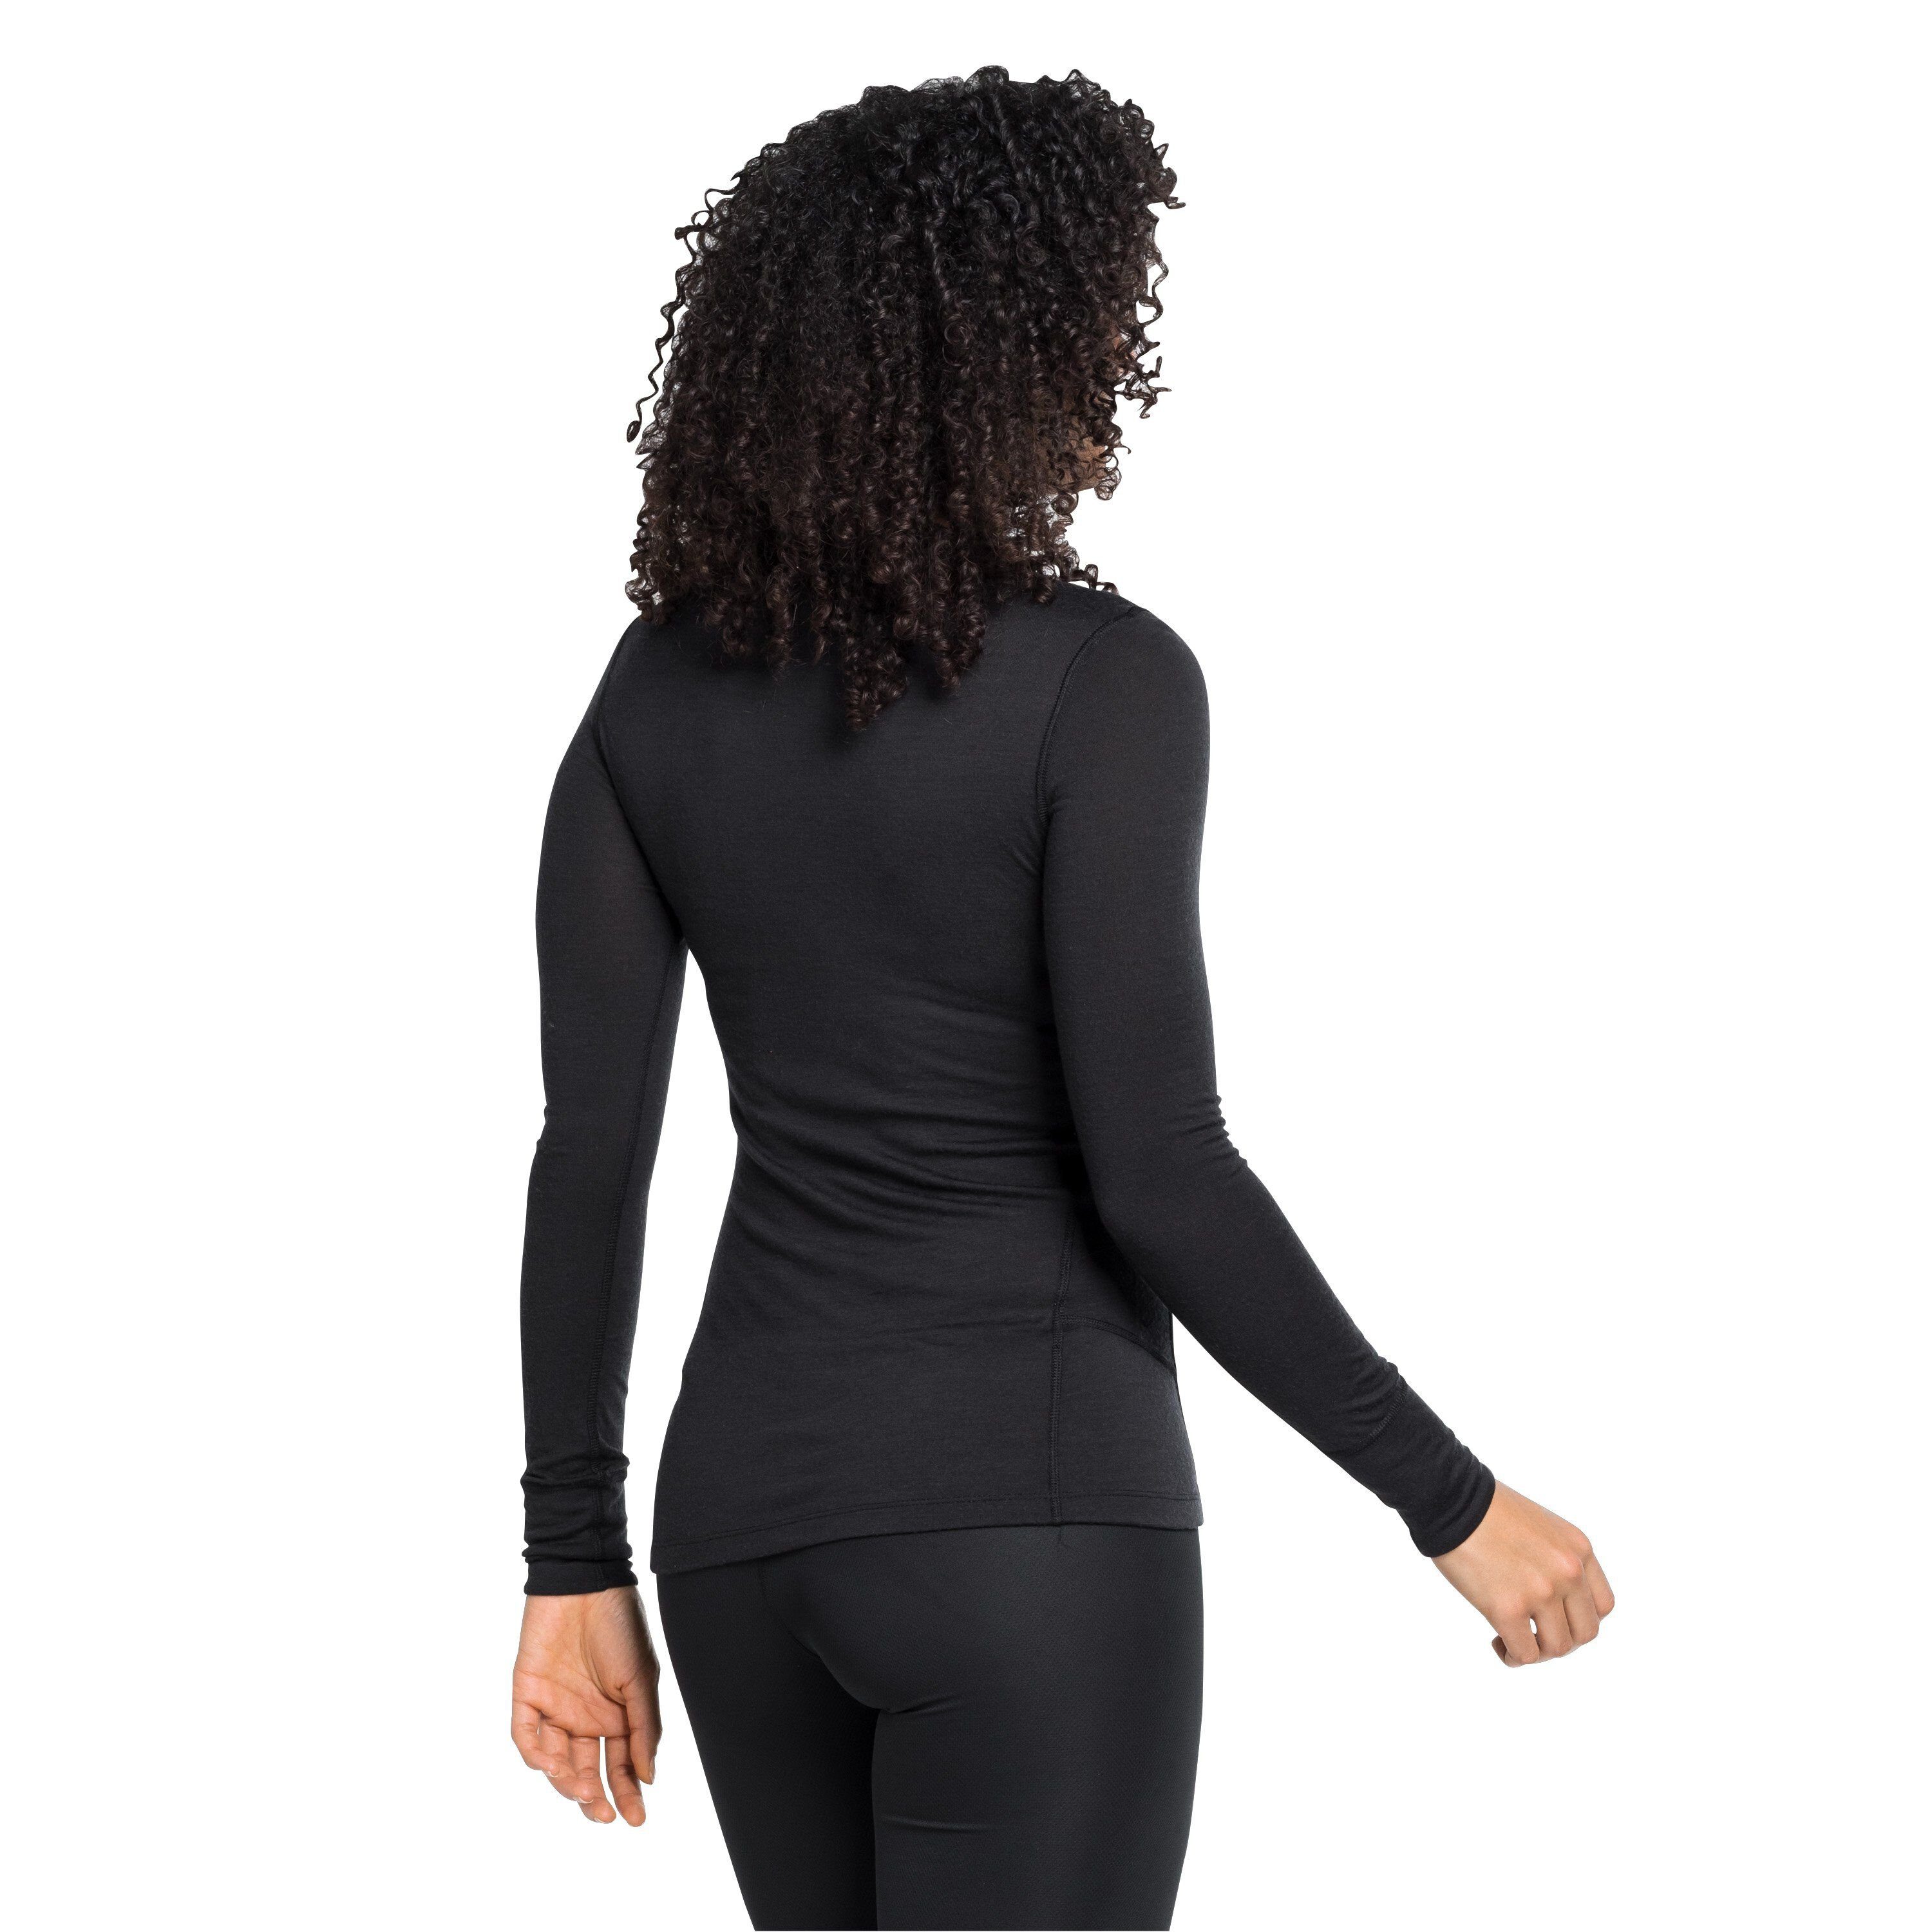 Odlo black Natural Damen Sportunterwäsche Langarm-Shirt Warm Funktionsunterhemd 100% Merino